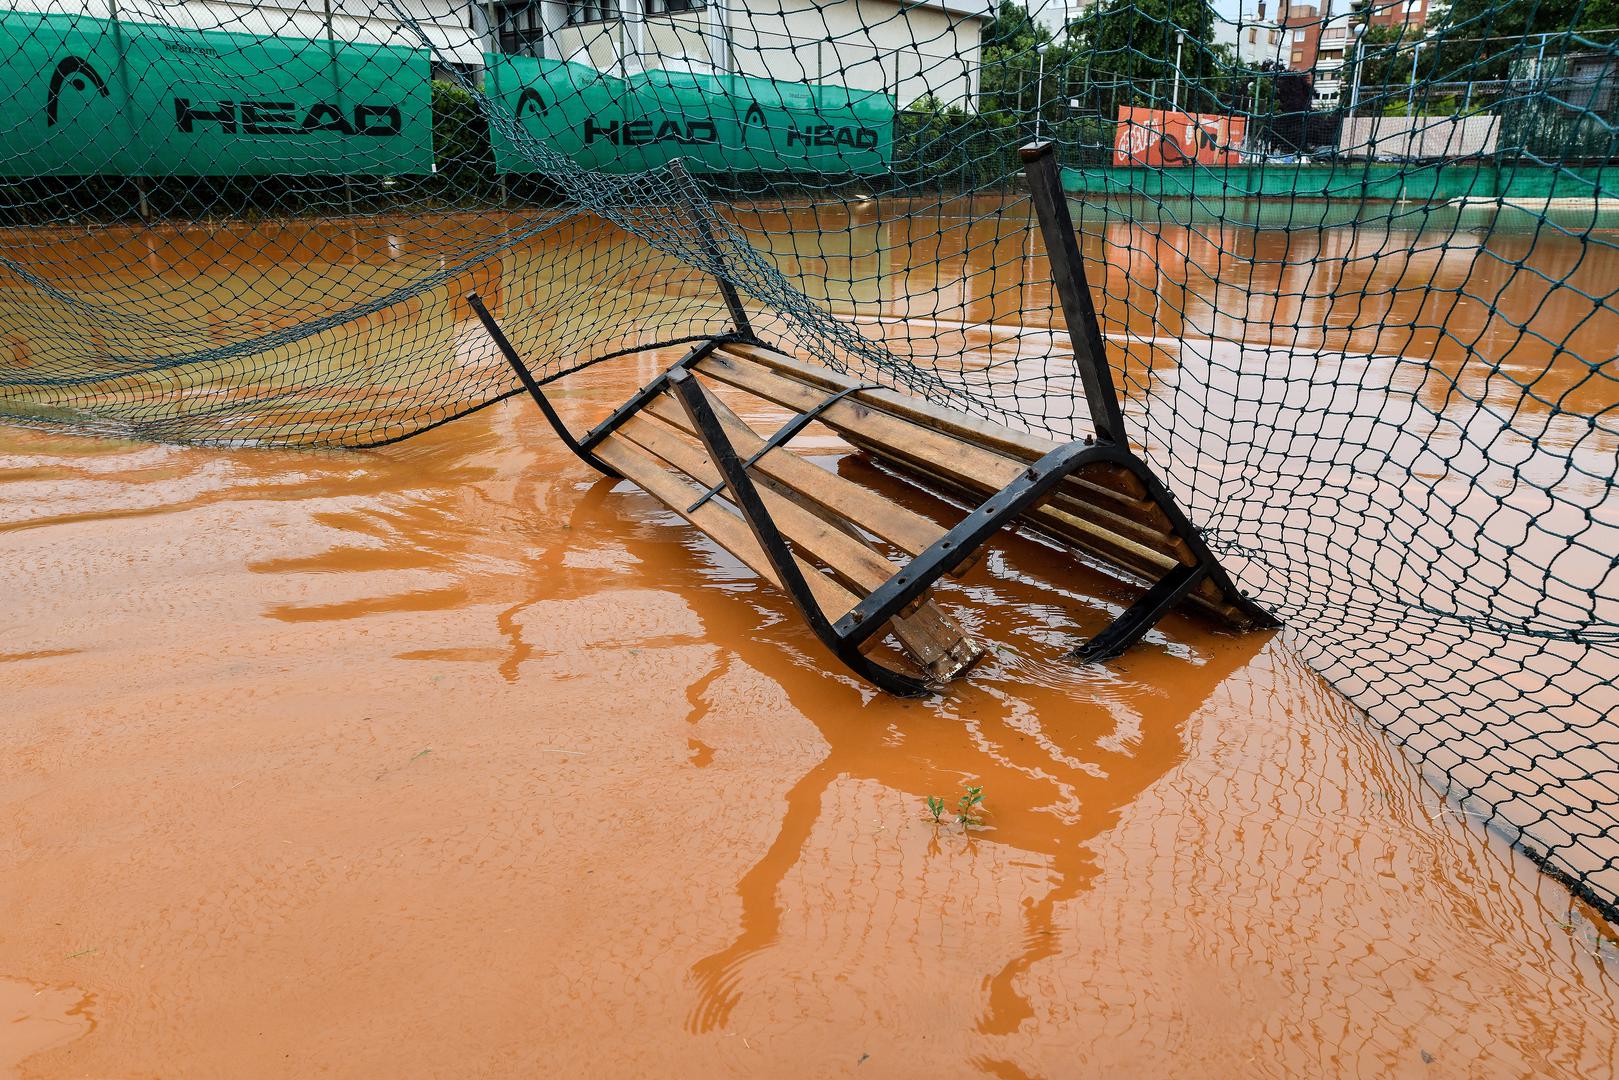 S obzirom na to da je kiša poplavila Ekonomski fakultet, KBC Rebro i Jordanovac, teško je očekivati kada će se tereni osušiti.